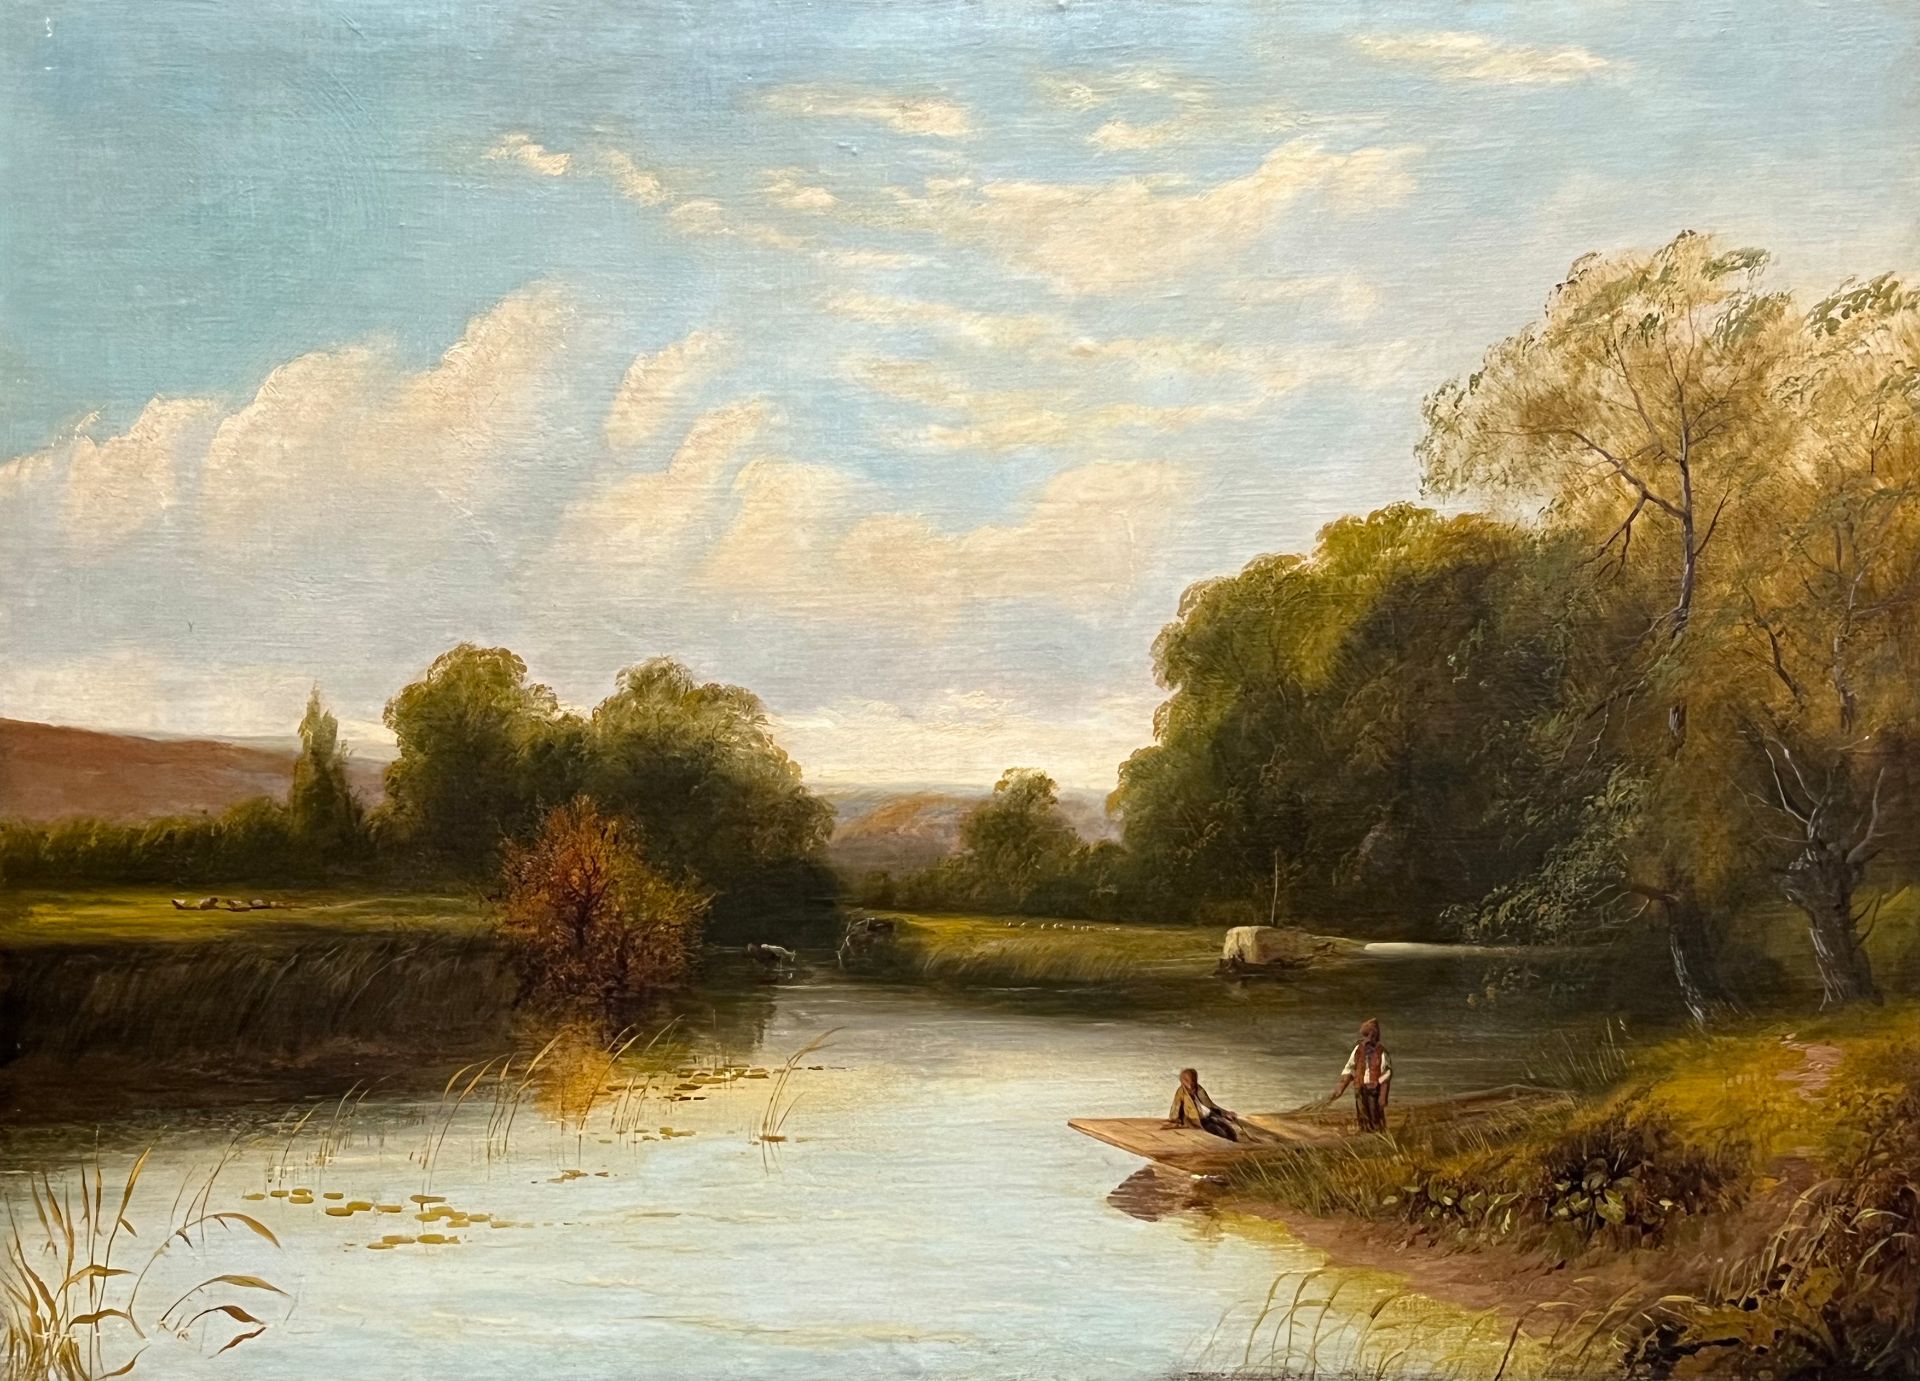 James GARLAND (1846 - 1944). "On the Thames at Medenham". Dated 1880.